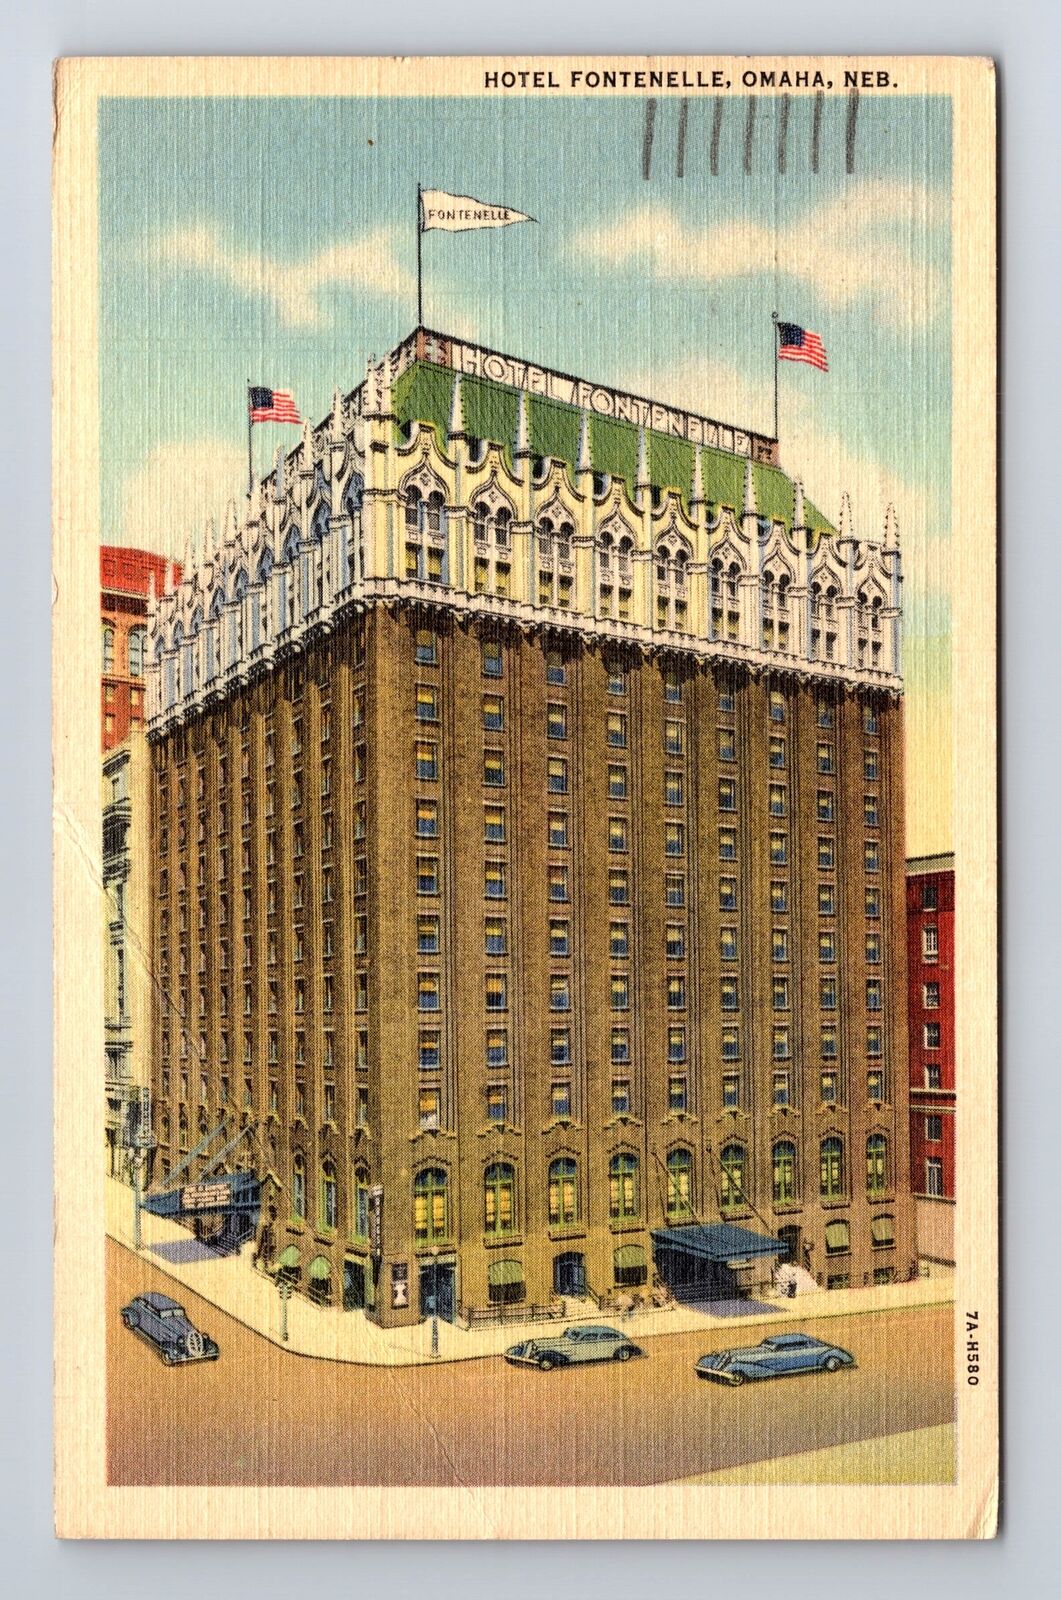 Omaha NE-Nebraska, Hotel Fontenelle, Advertising, Vintage c1950 Postcard